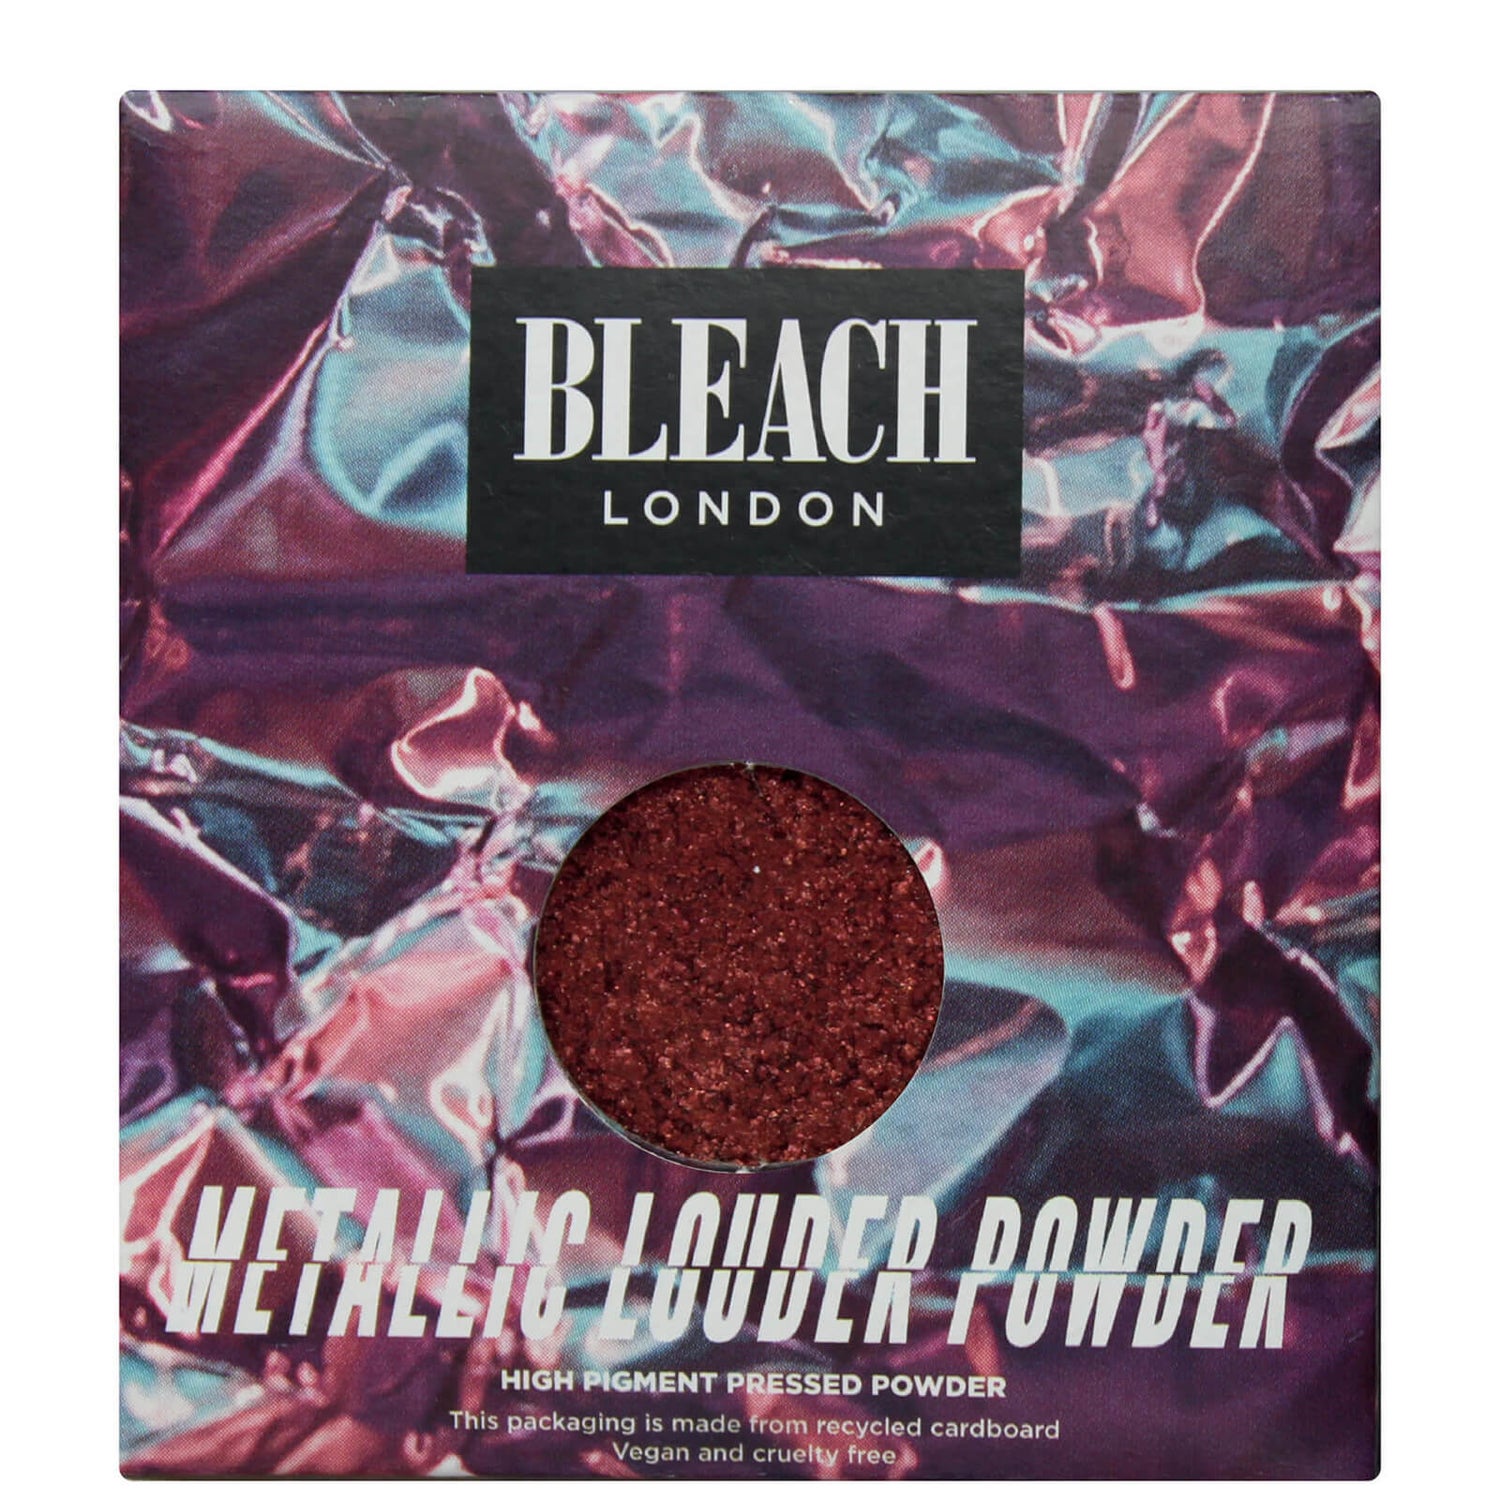 BLEACH LONDON Metallic Louder Powder ombretto Isr 4 Me